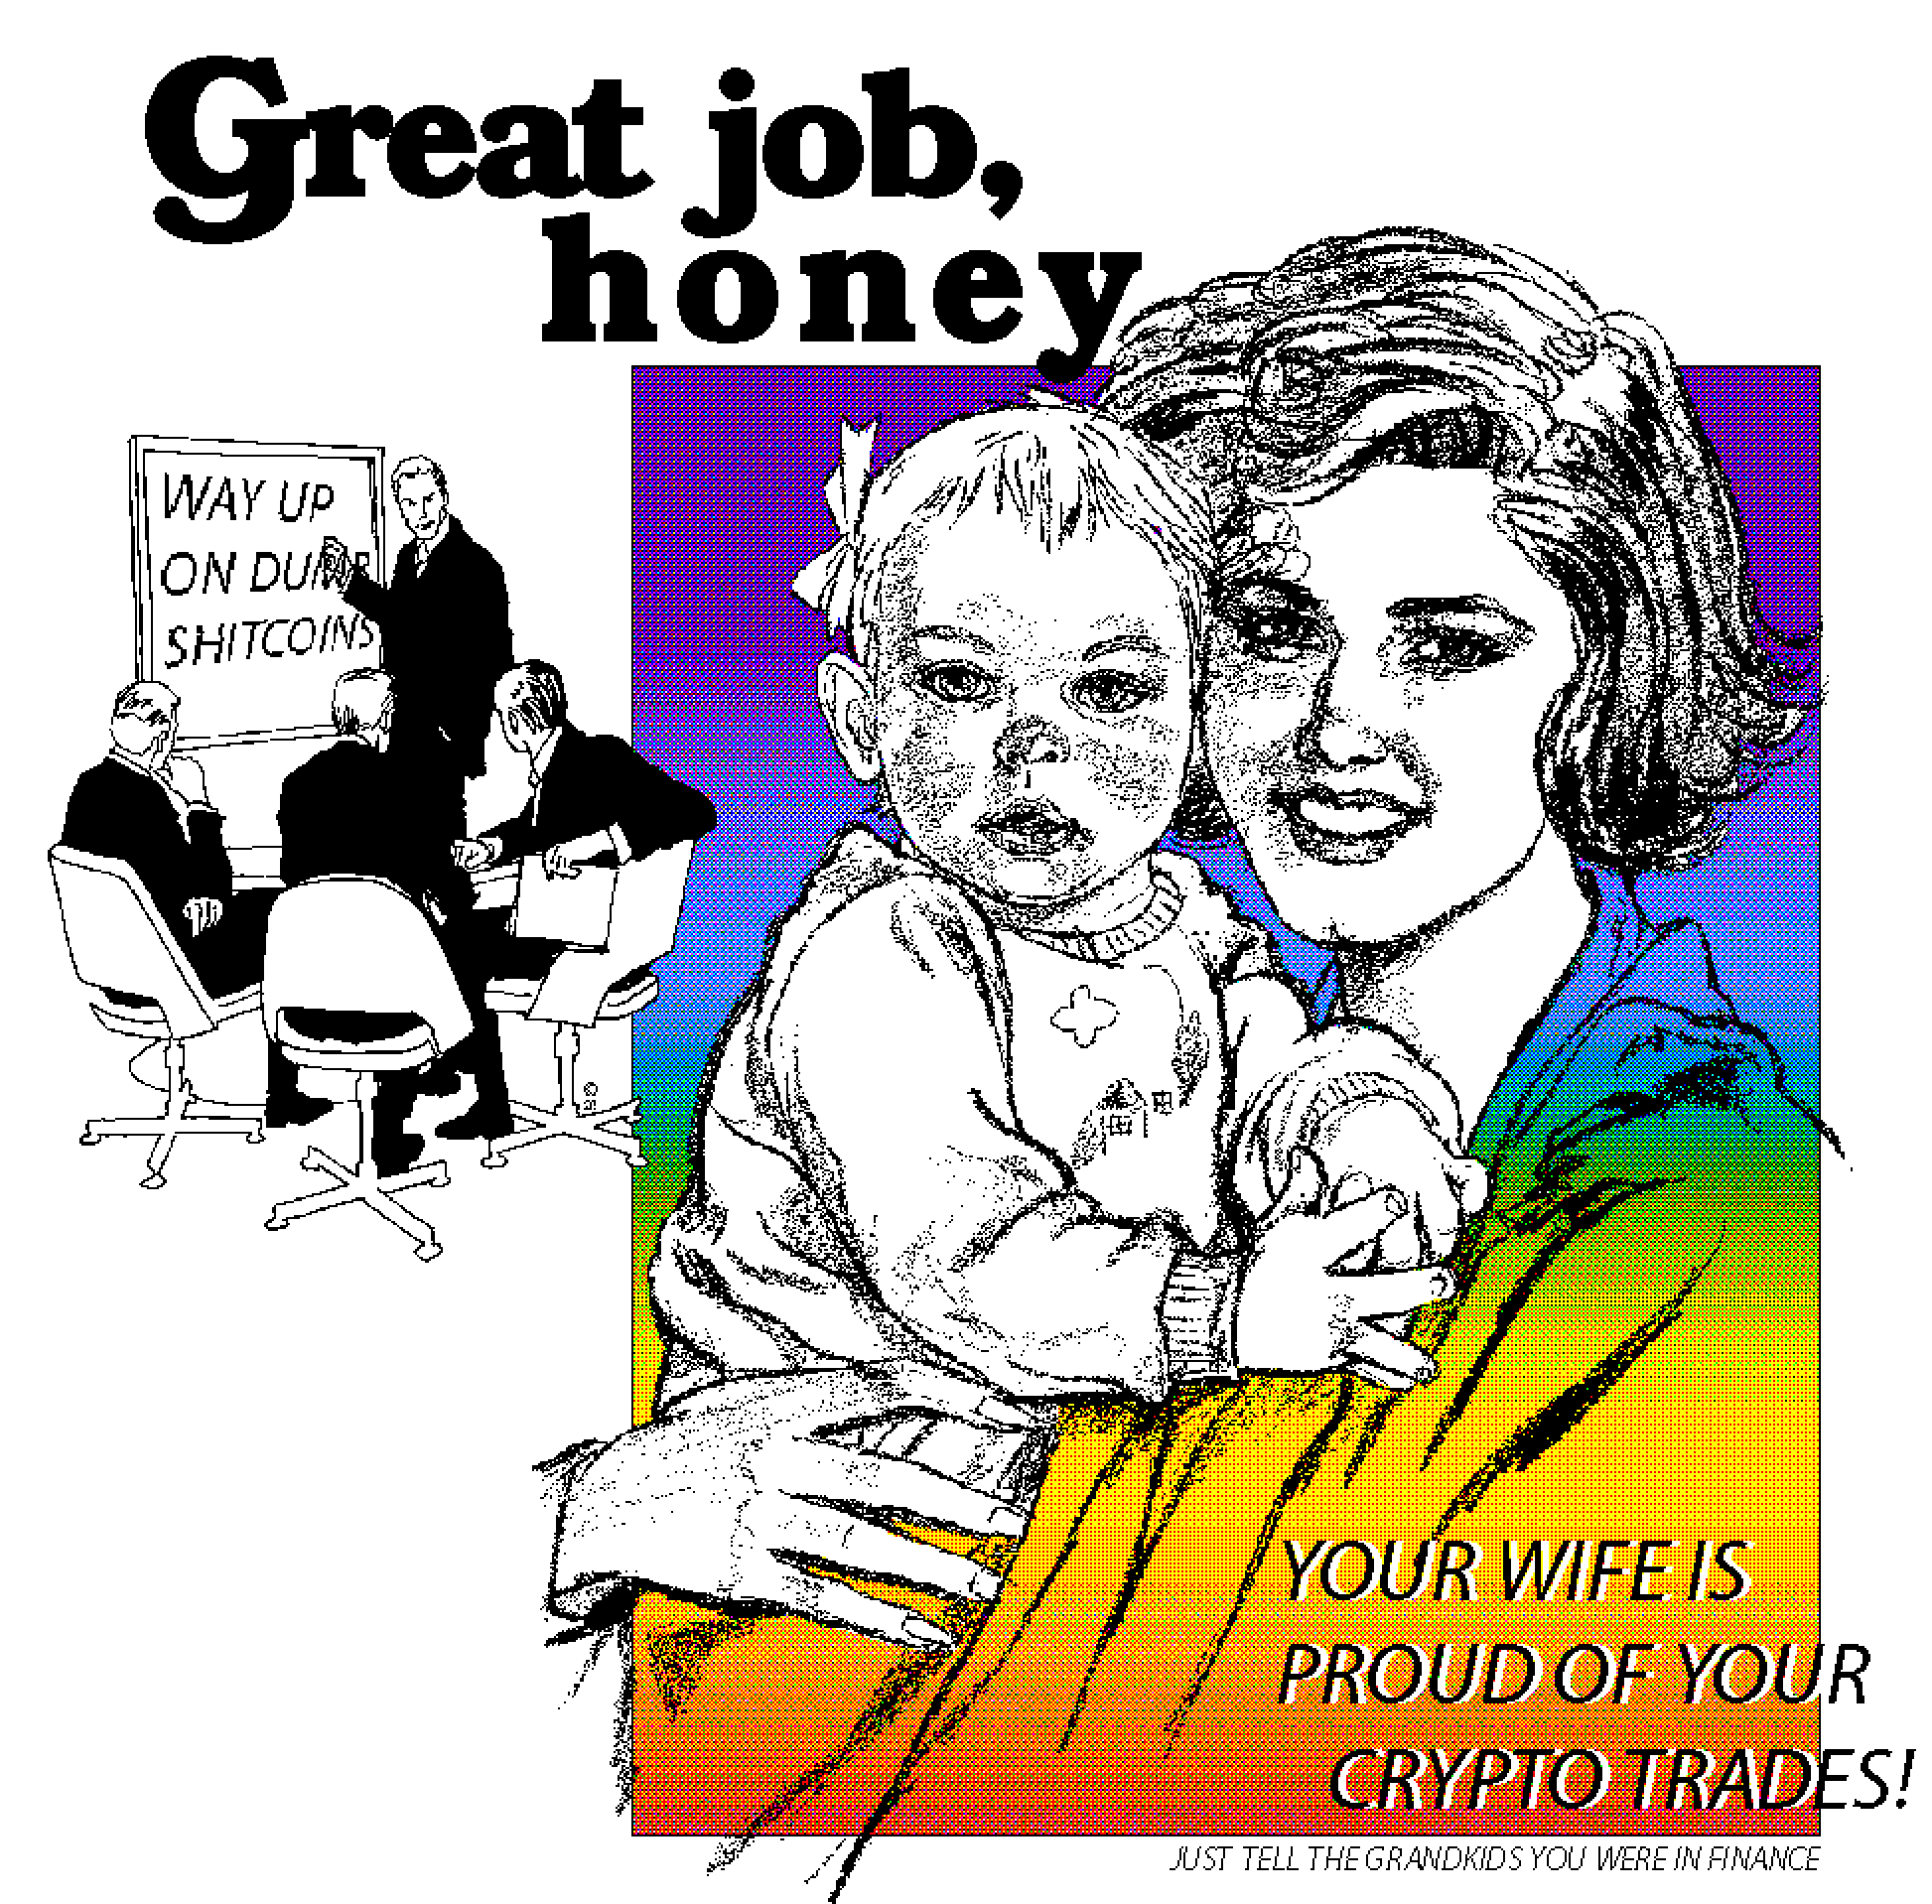 Great job, honey